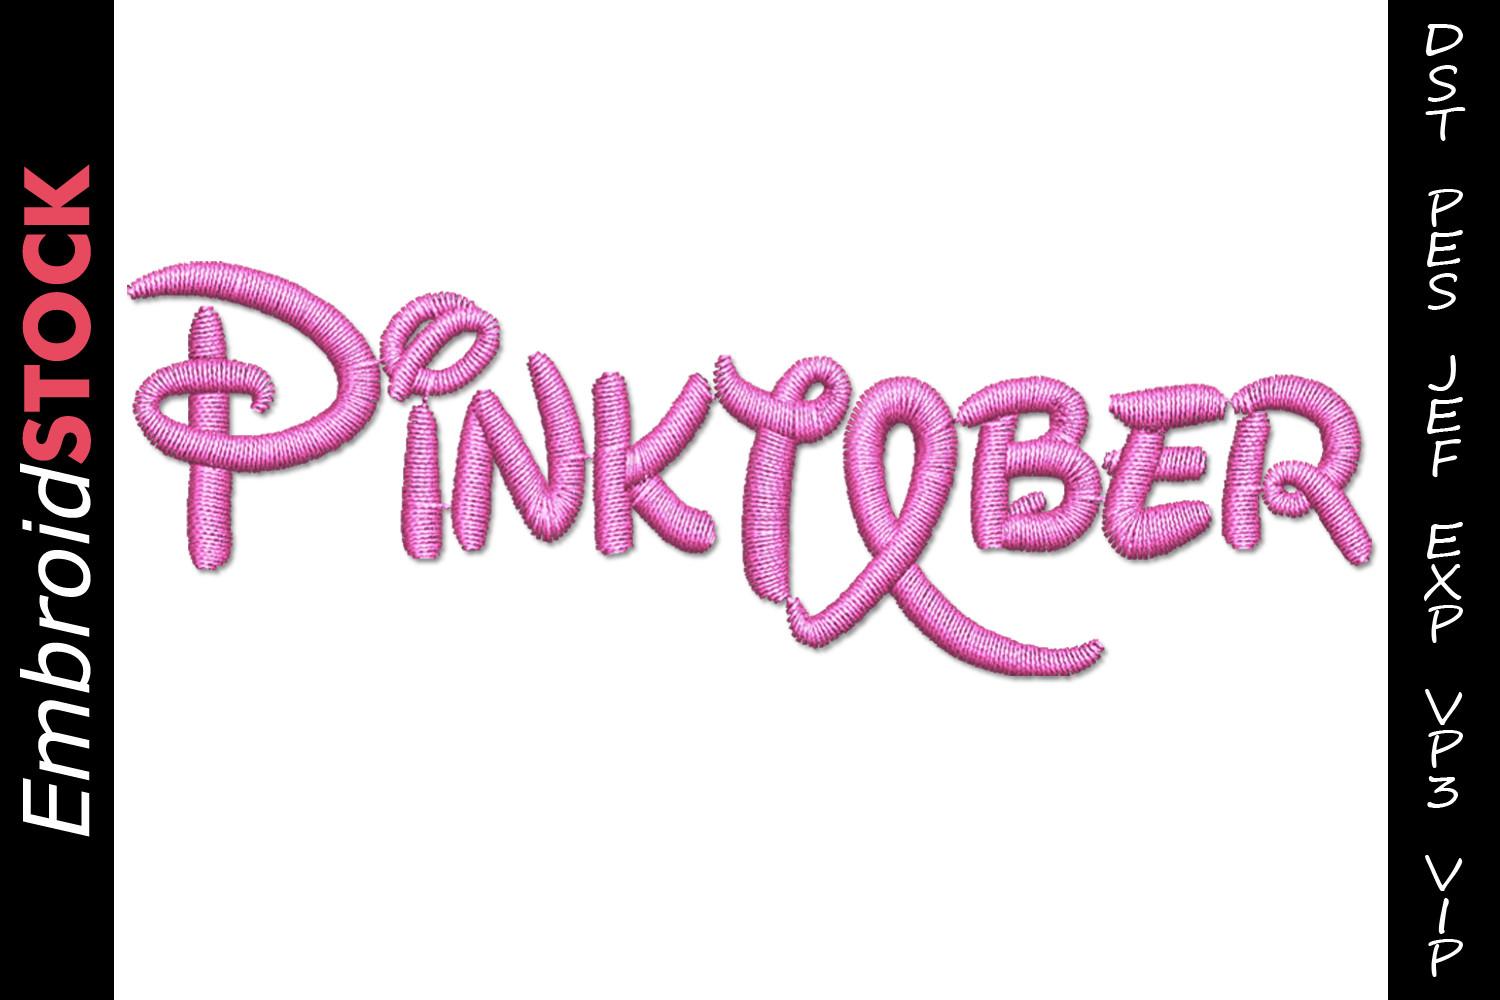 Pinktober Breast Cancer Awareness